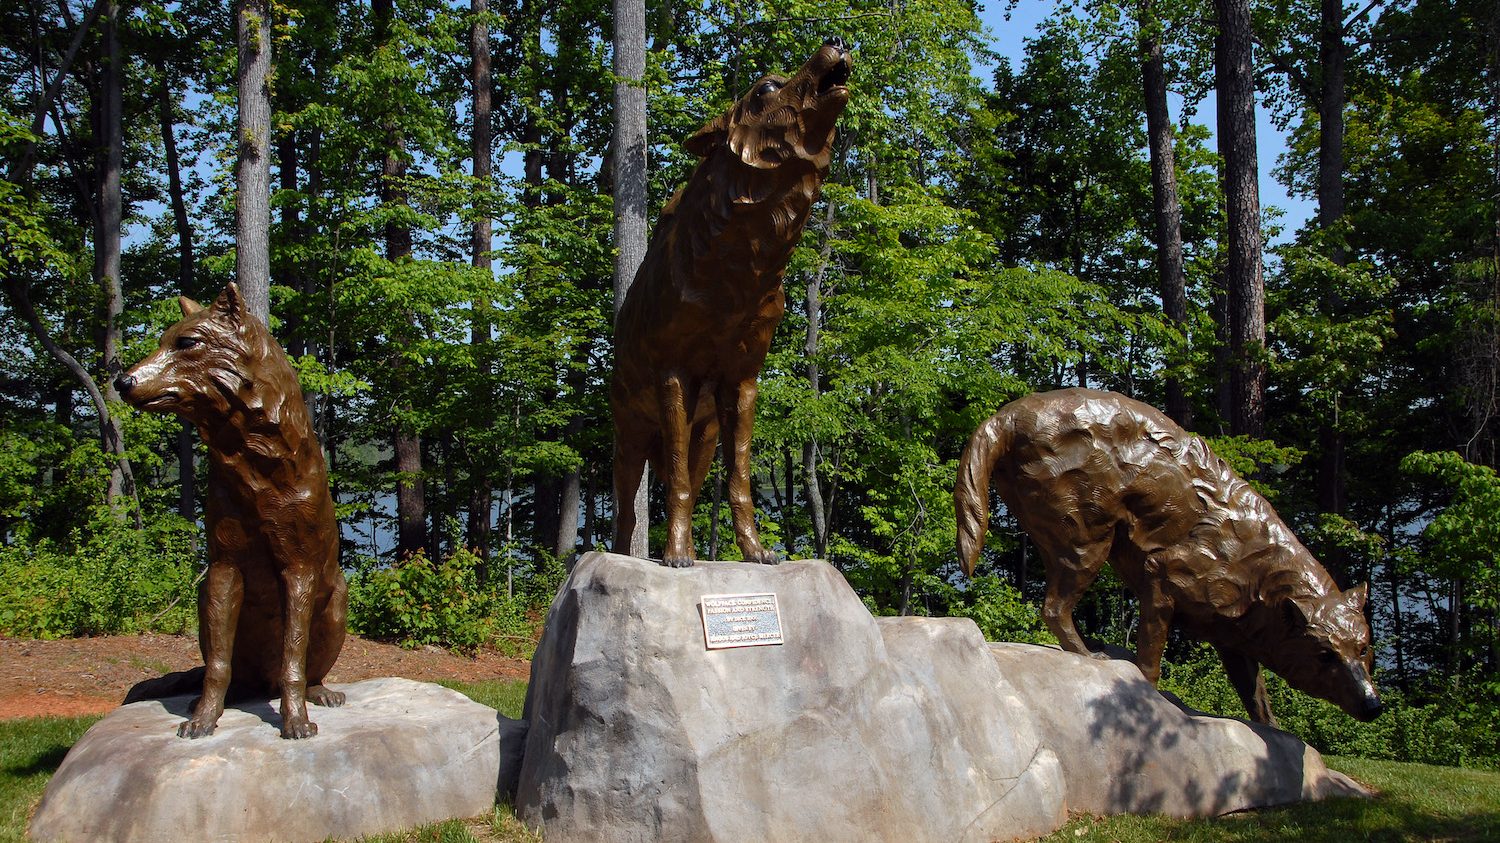 Alumni wolf statues on campus